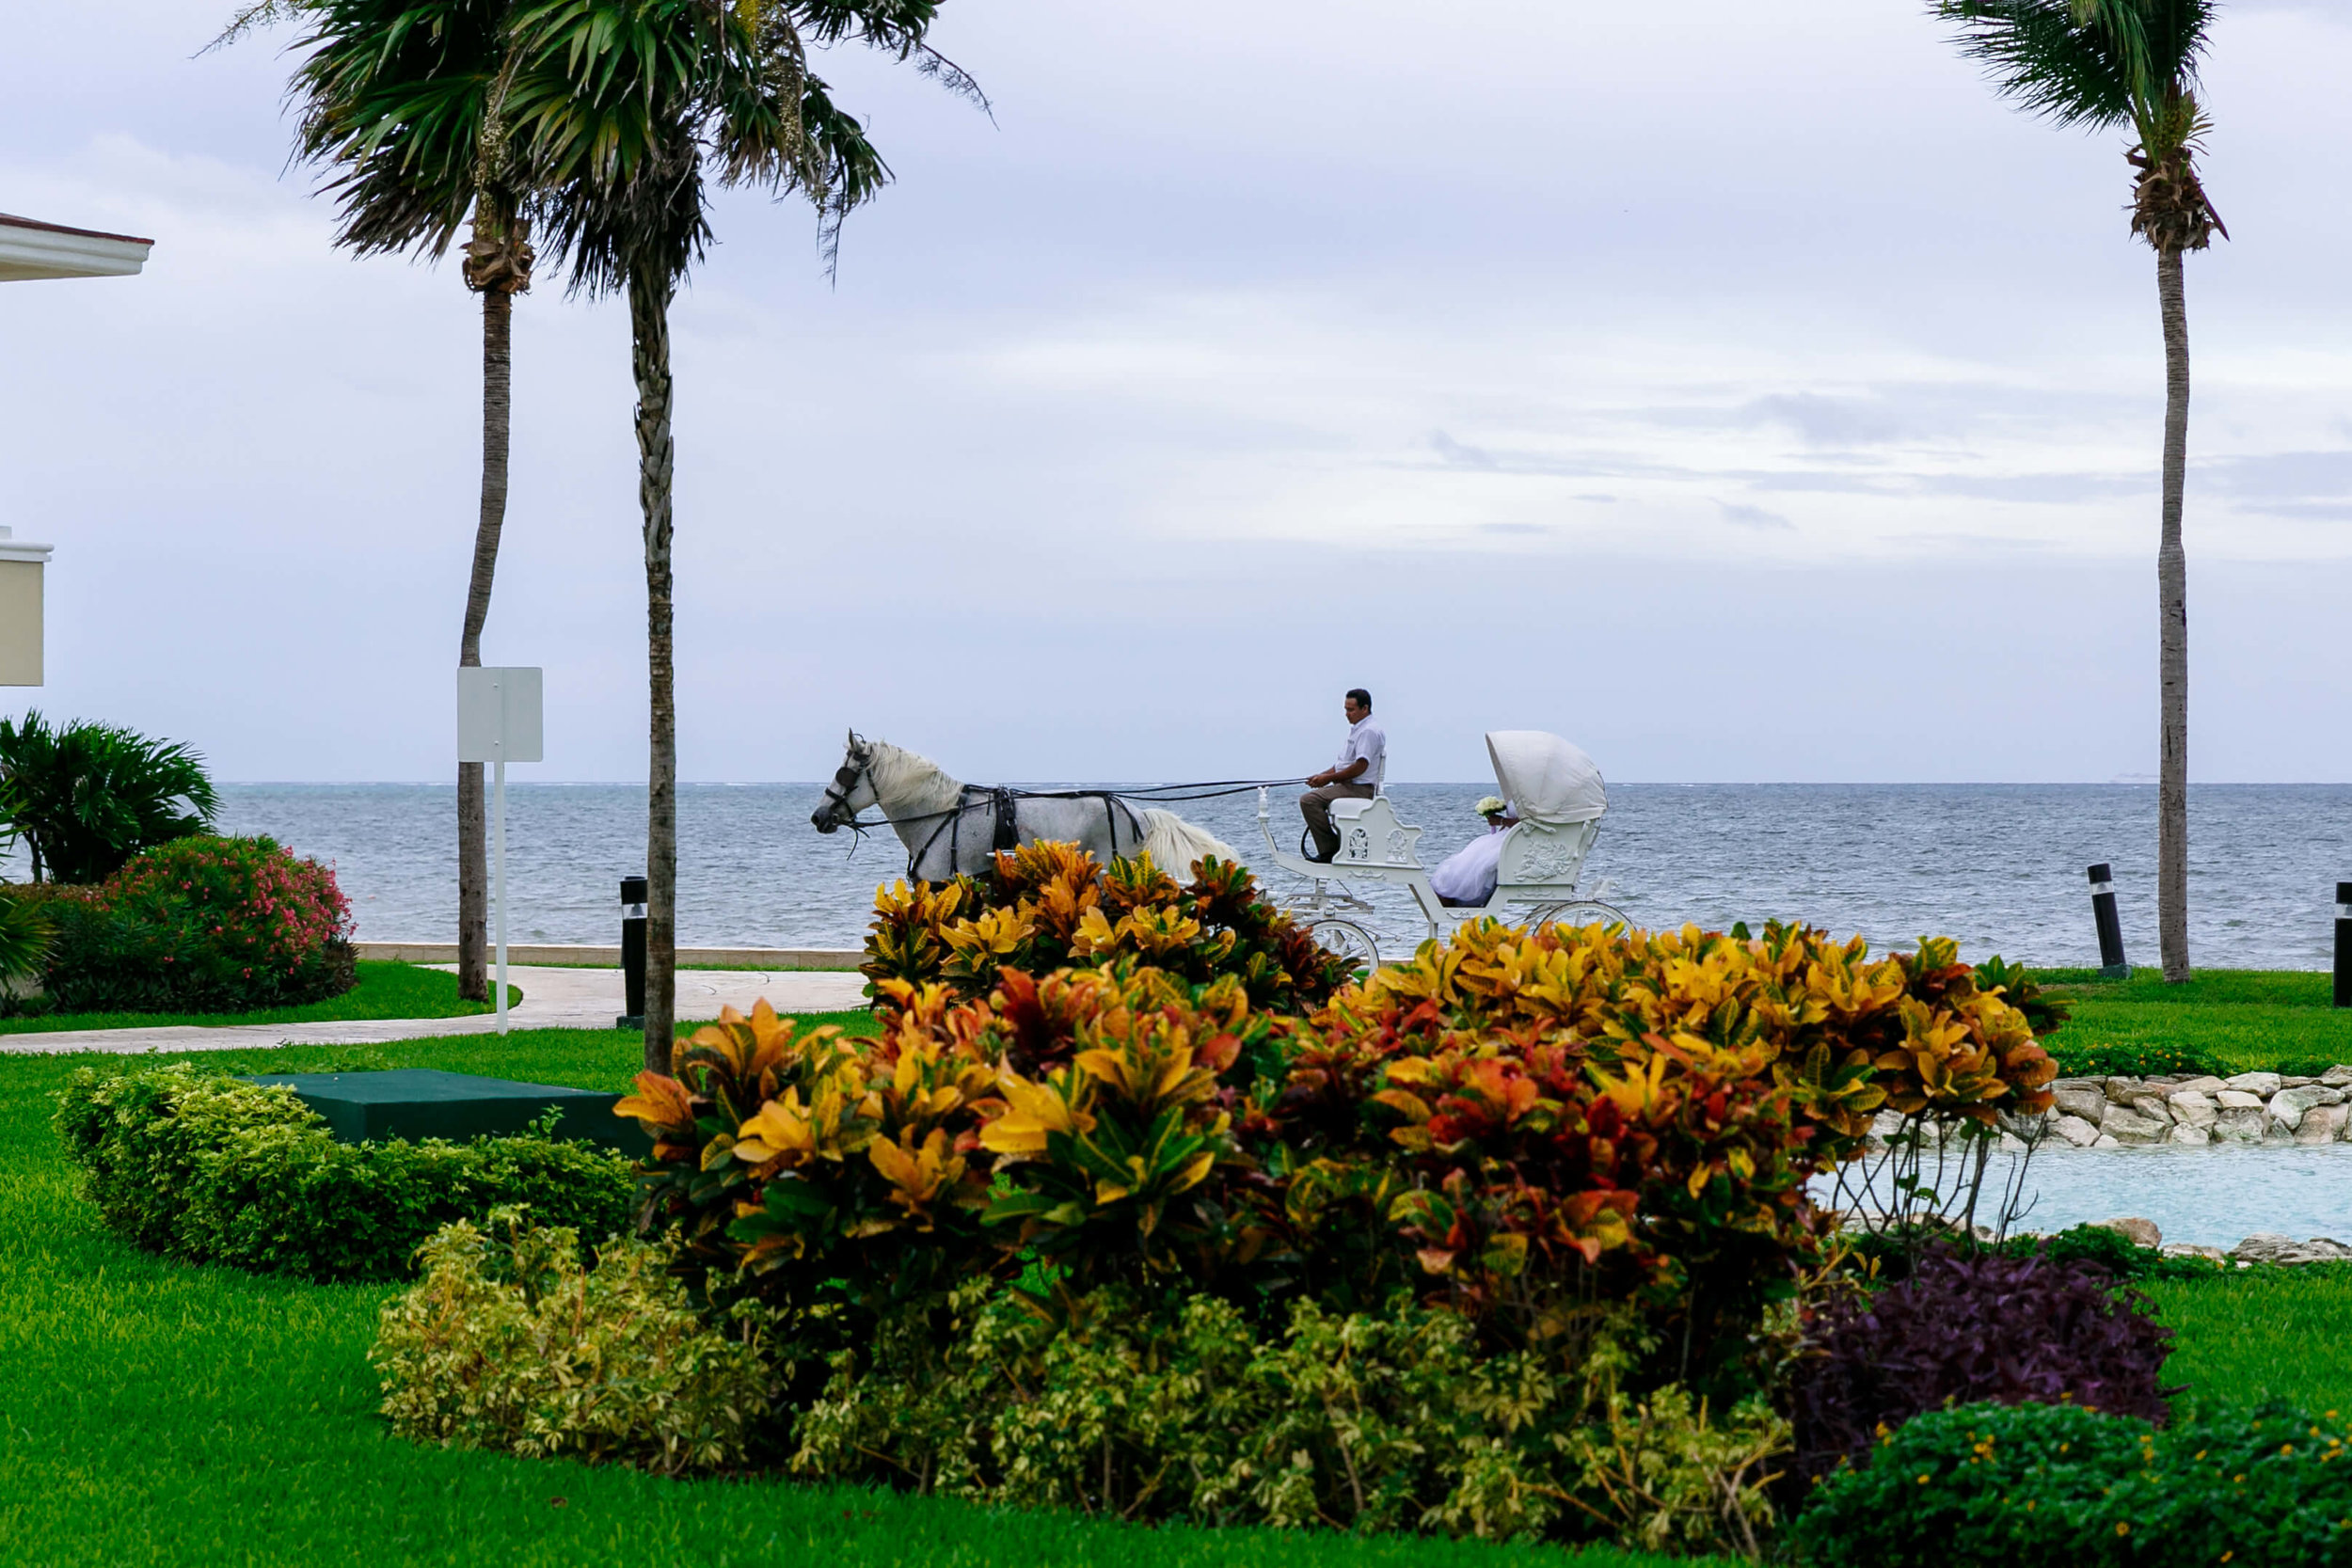 tressa-how-to-plan-a-destination-wedding-in-cancun-mexico-moon-palace-resort-black-destination-bride-destiland-desti-guide-to-destination-weddings-beach-wedding-horse-carriage-1.jpg